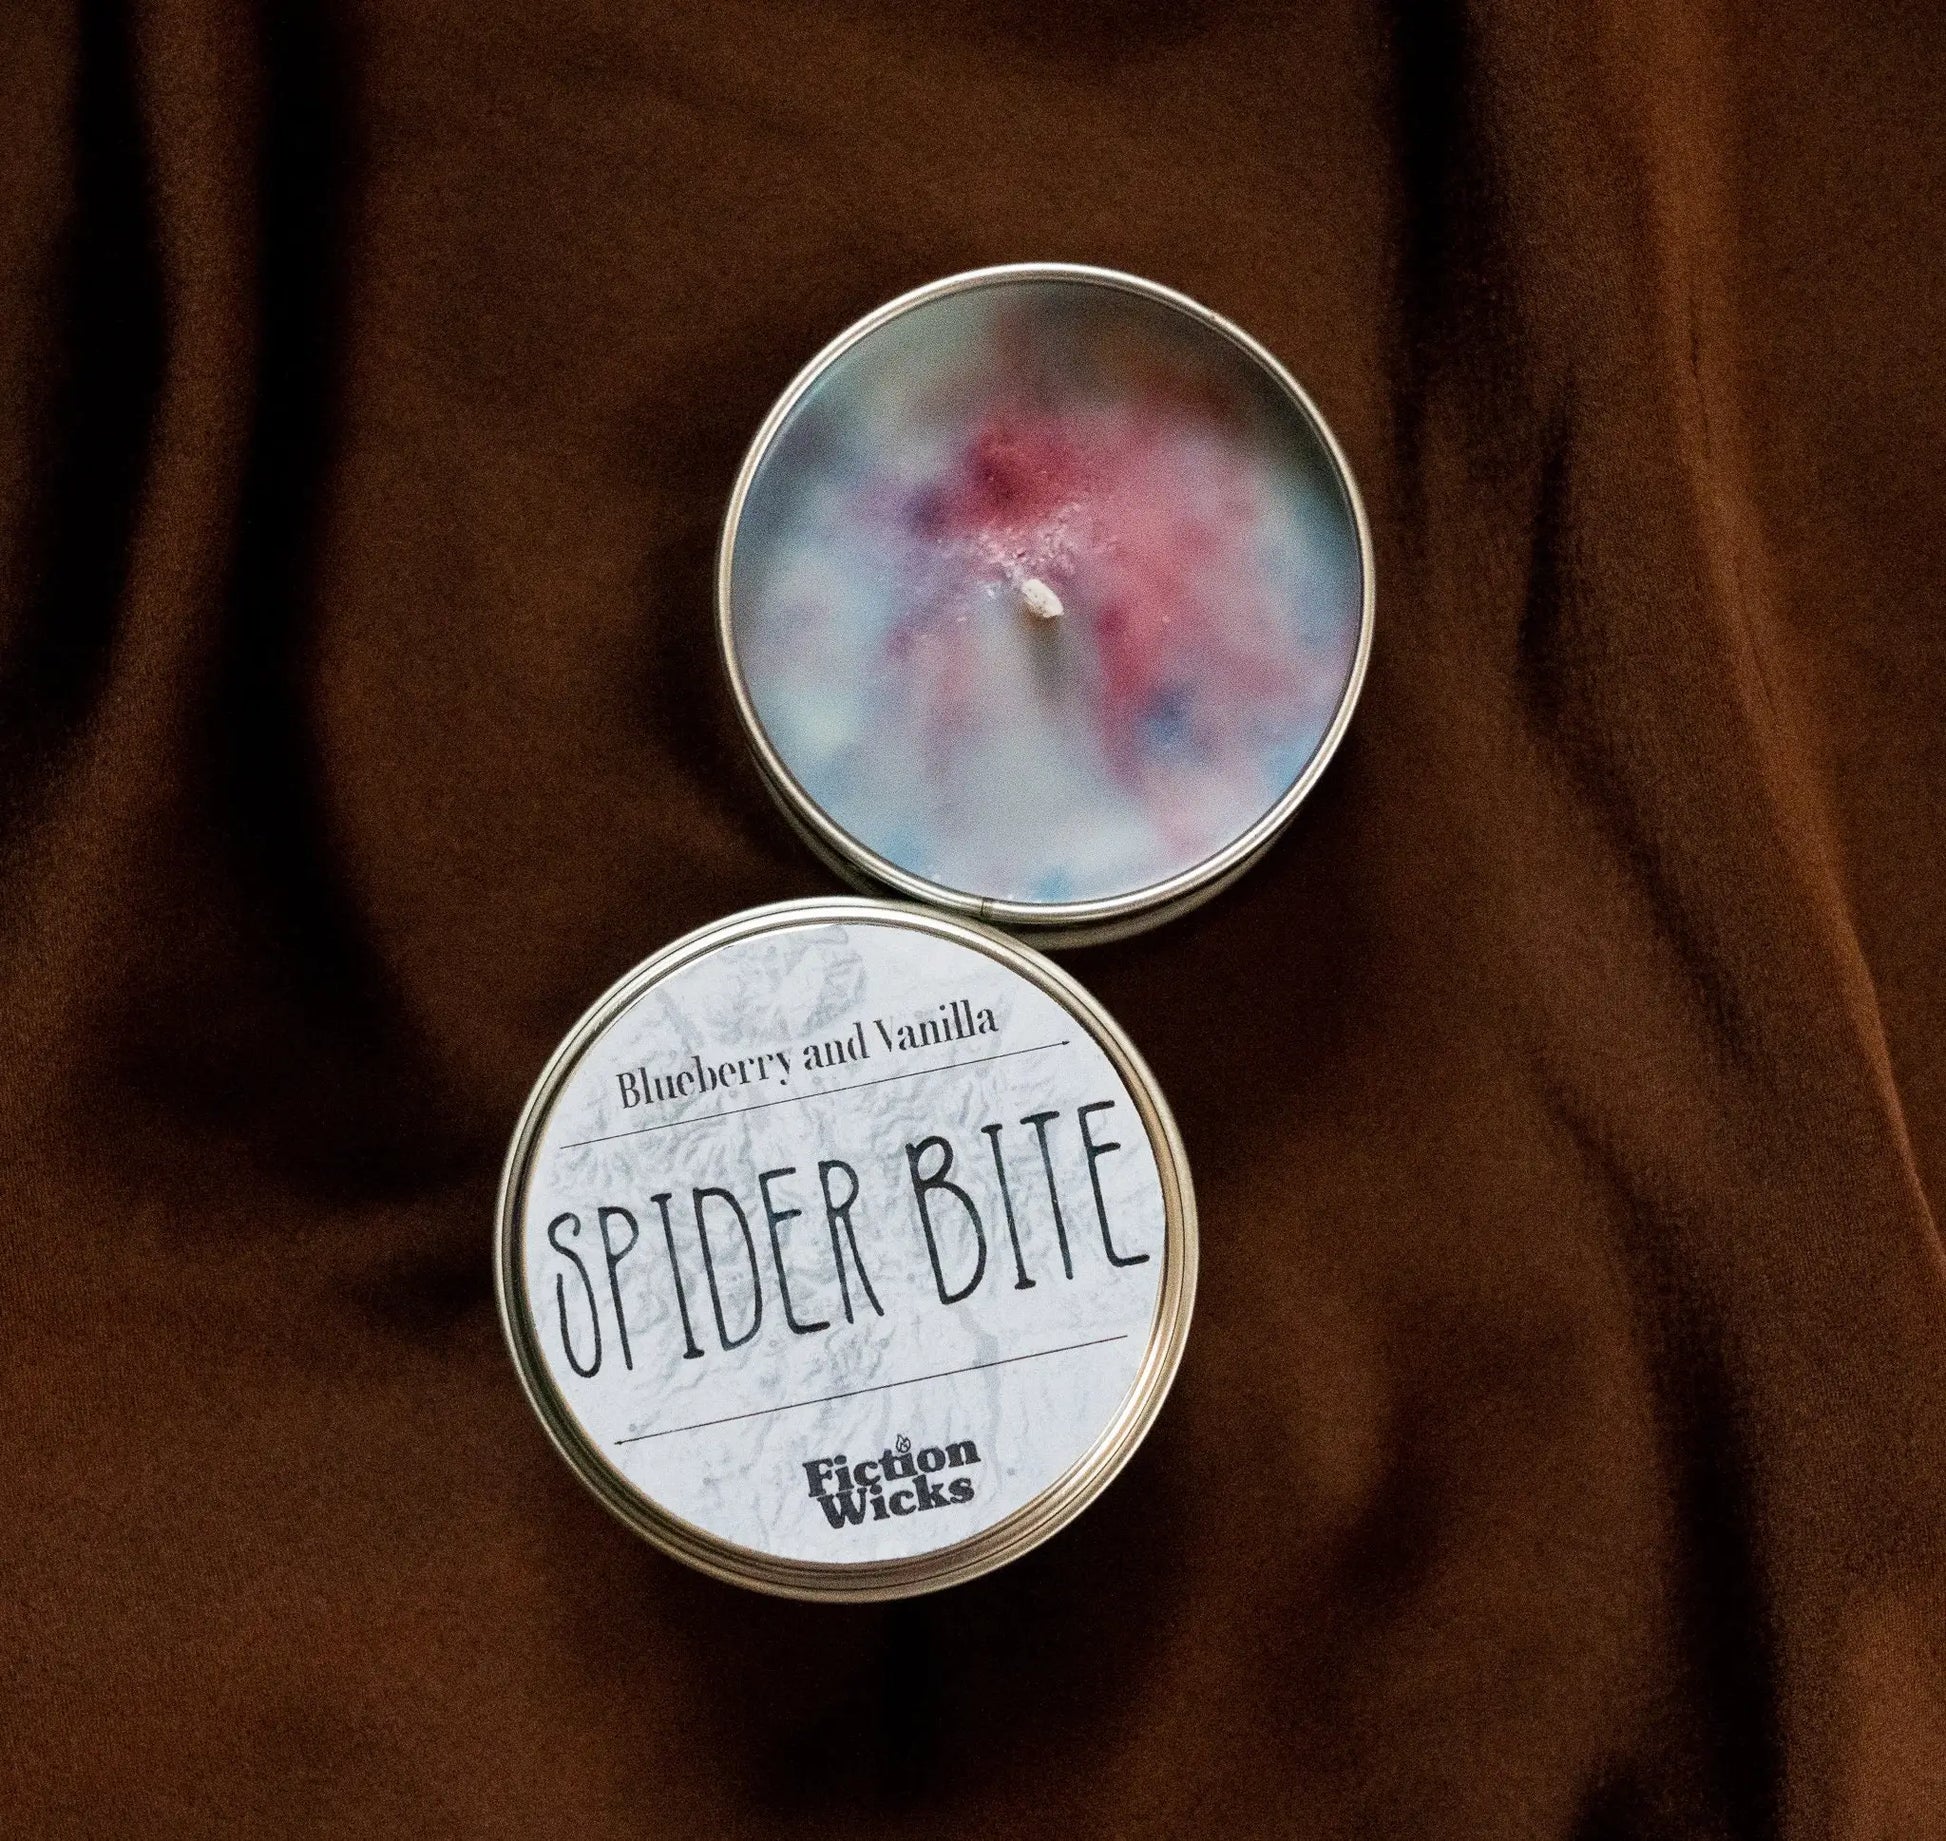 Spider Bite | marvel inspired || Vanilla and blueberry fictionwicks faire